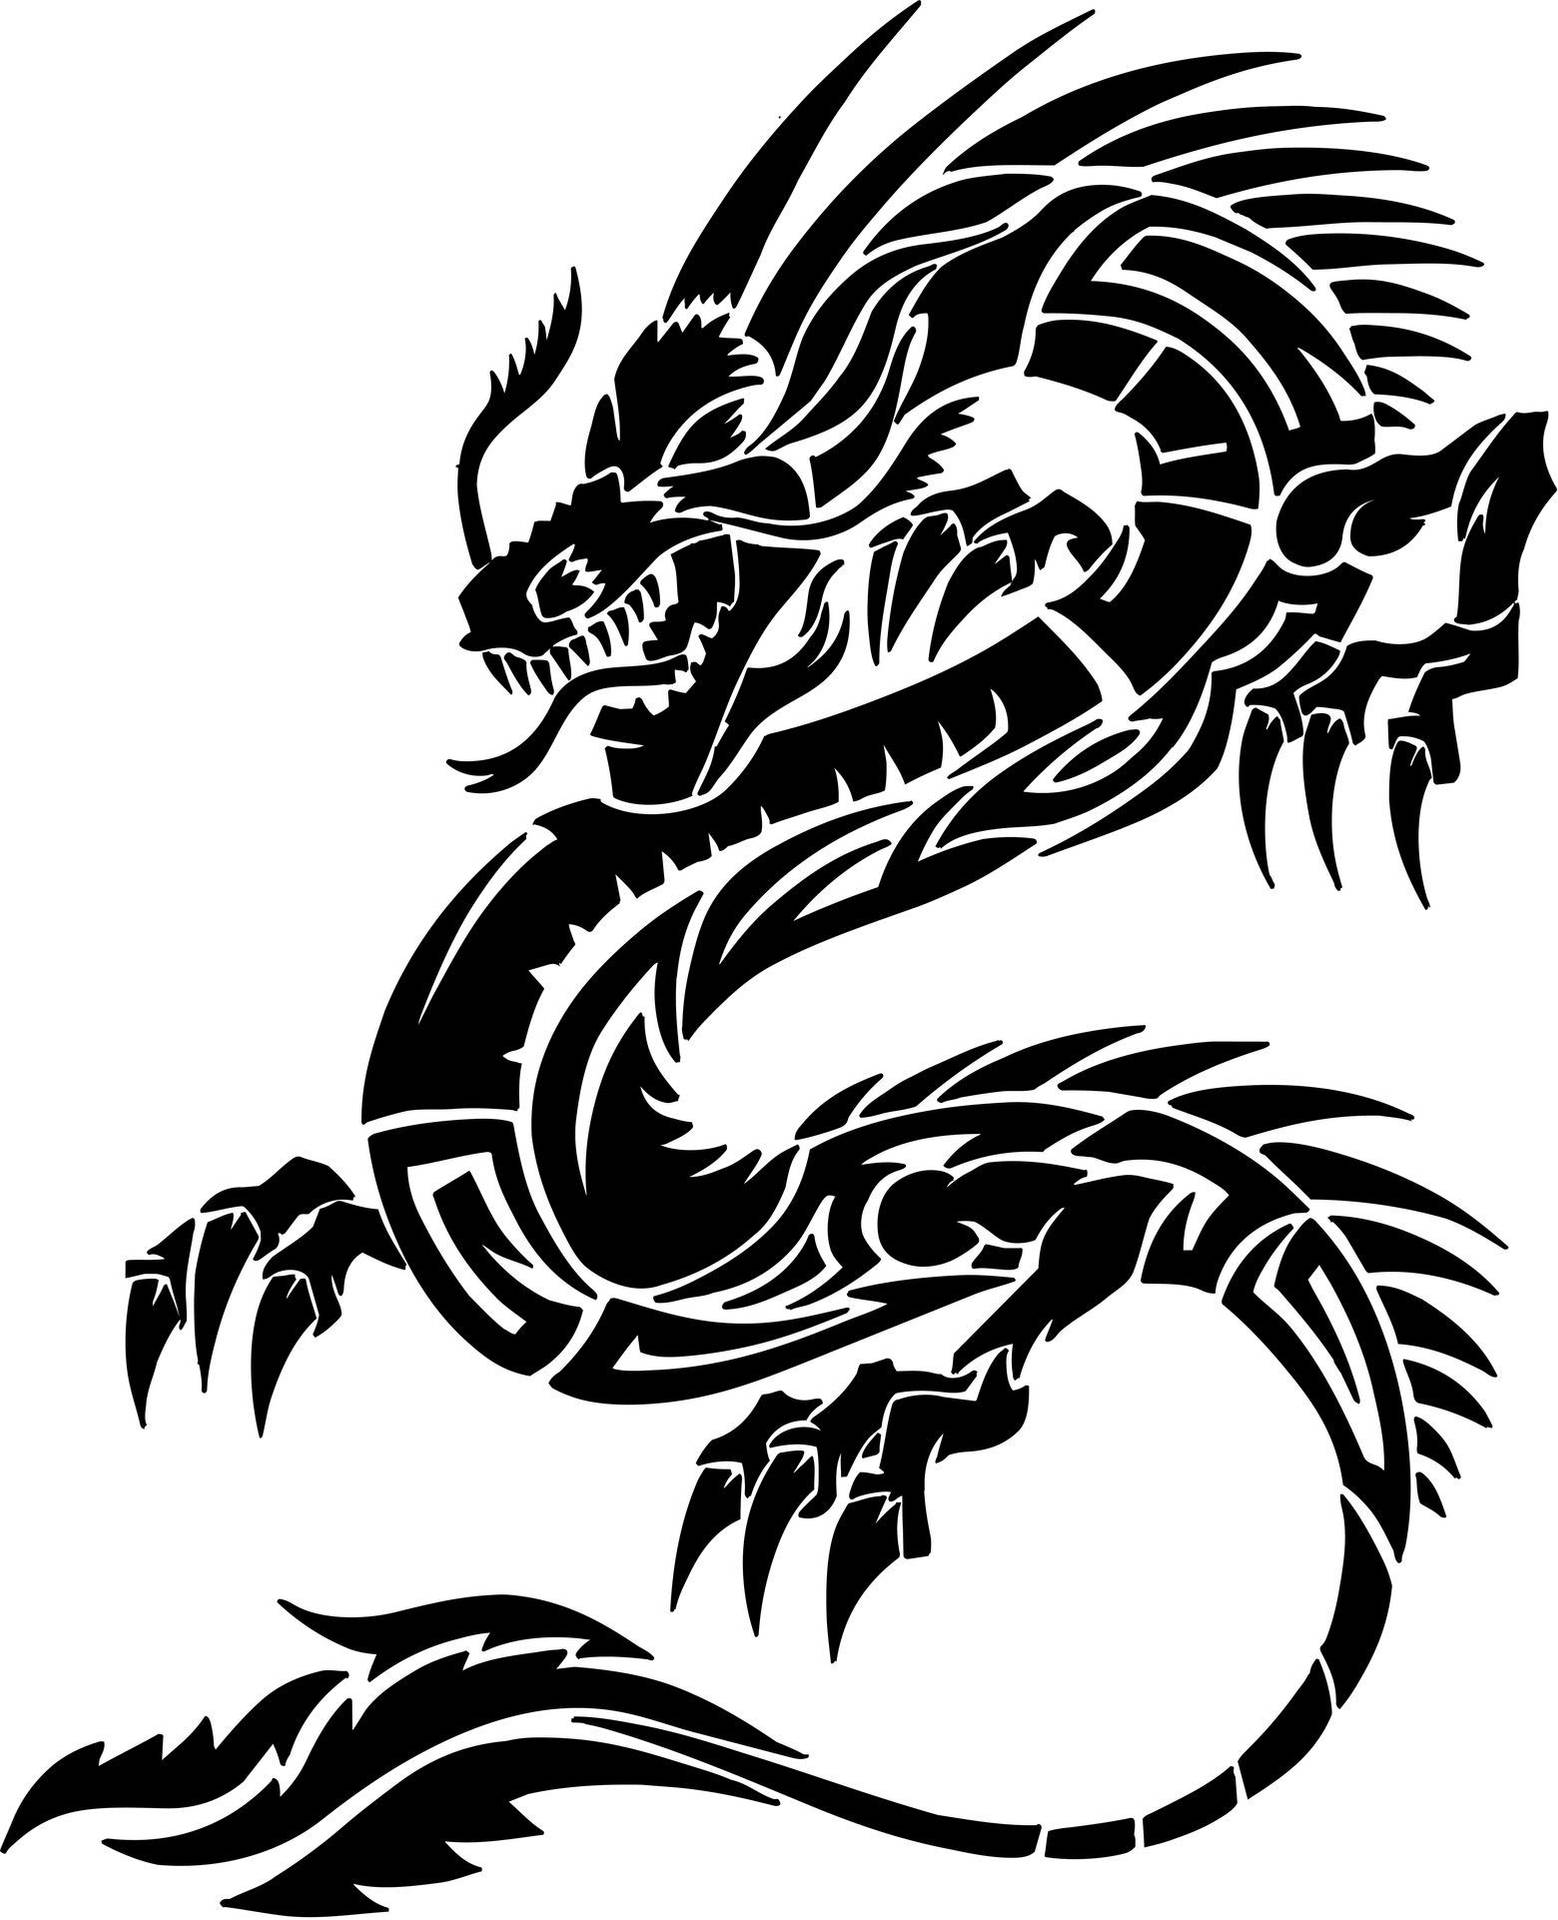 Caption: Intricate Japanese Dragon Tattoo Artwork Background